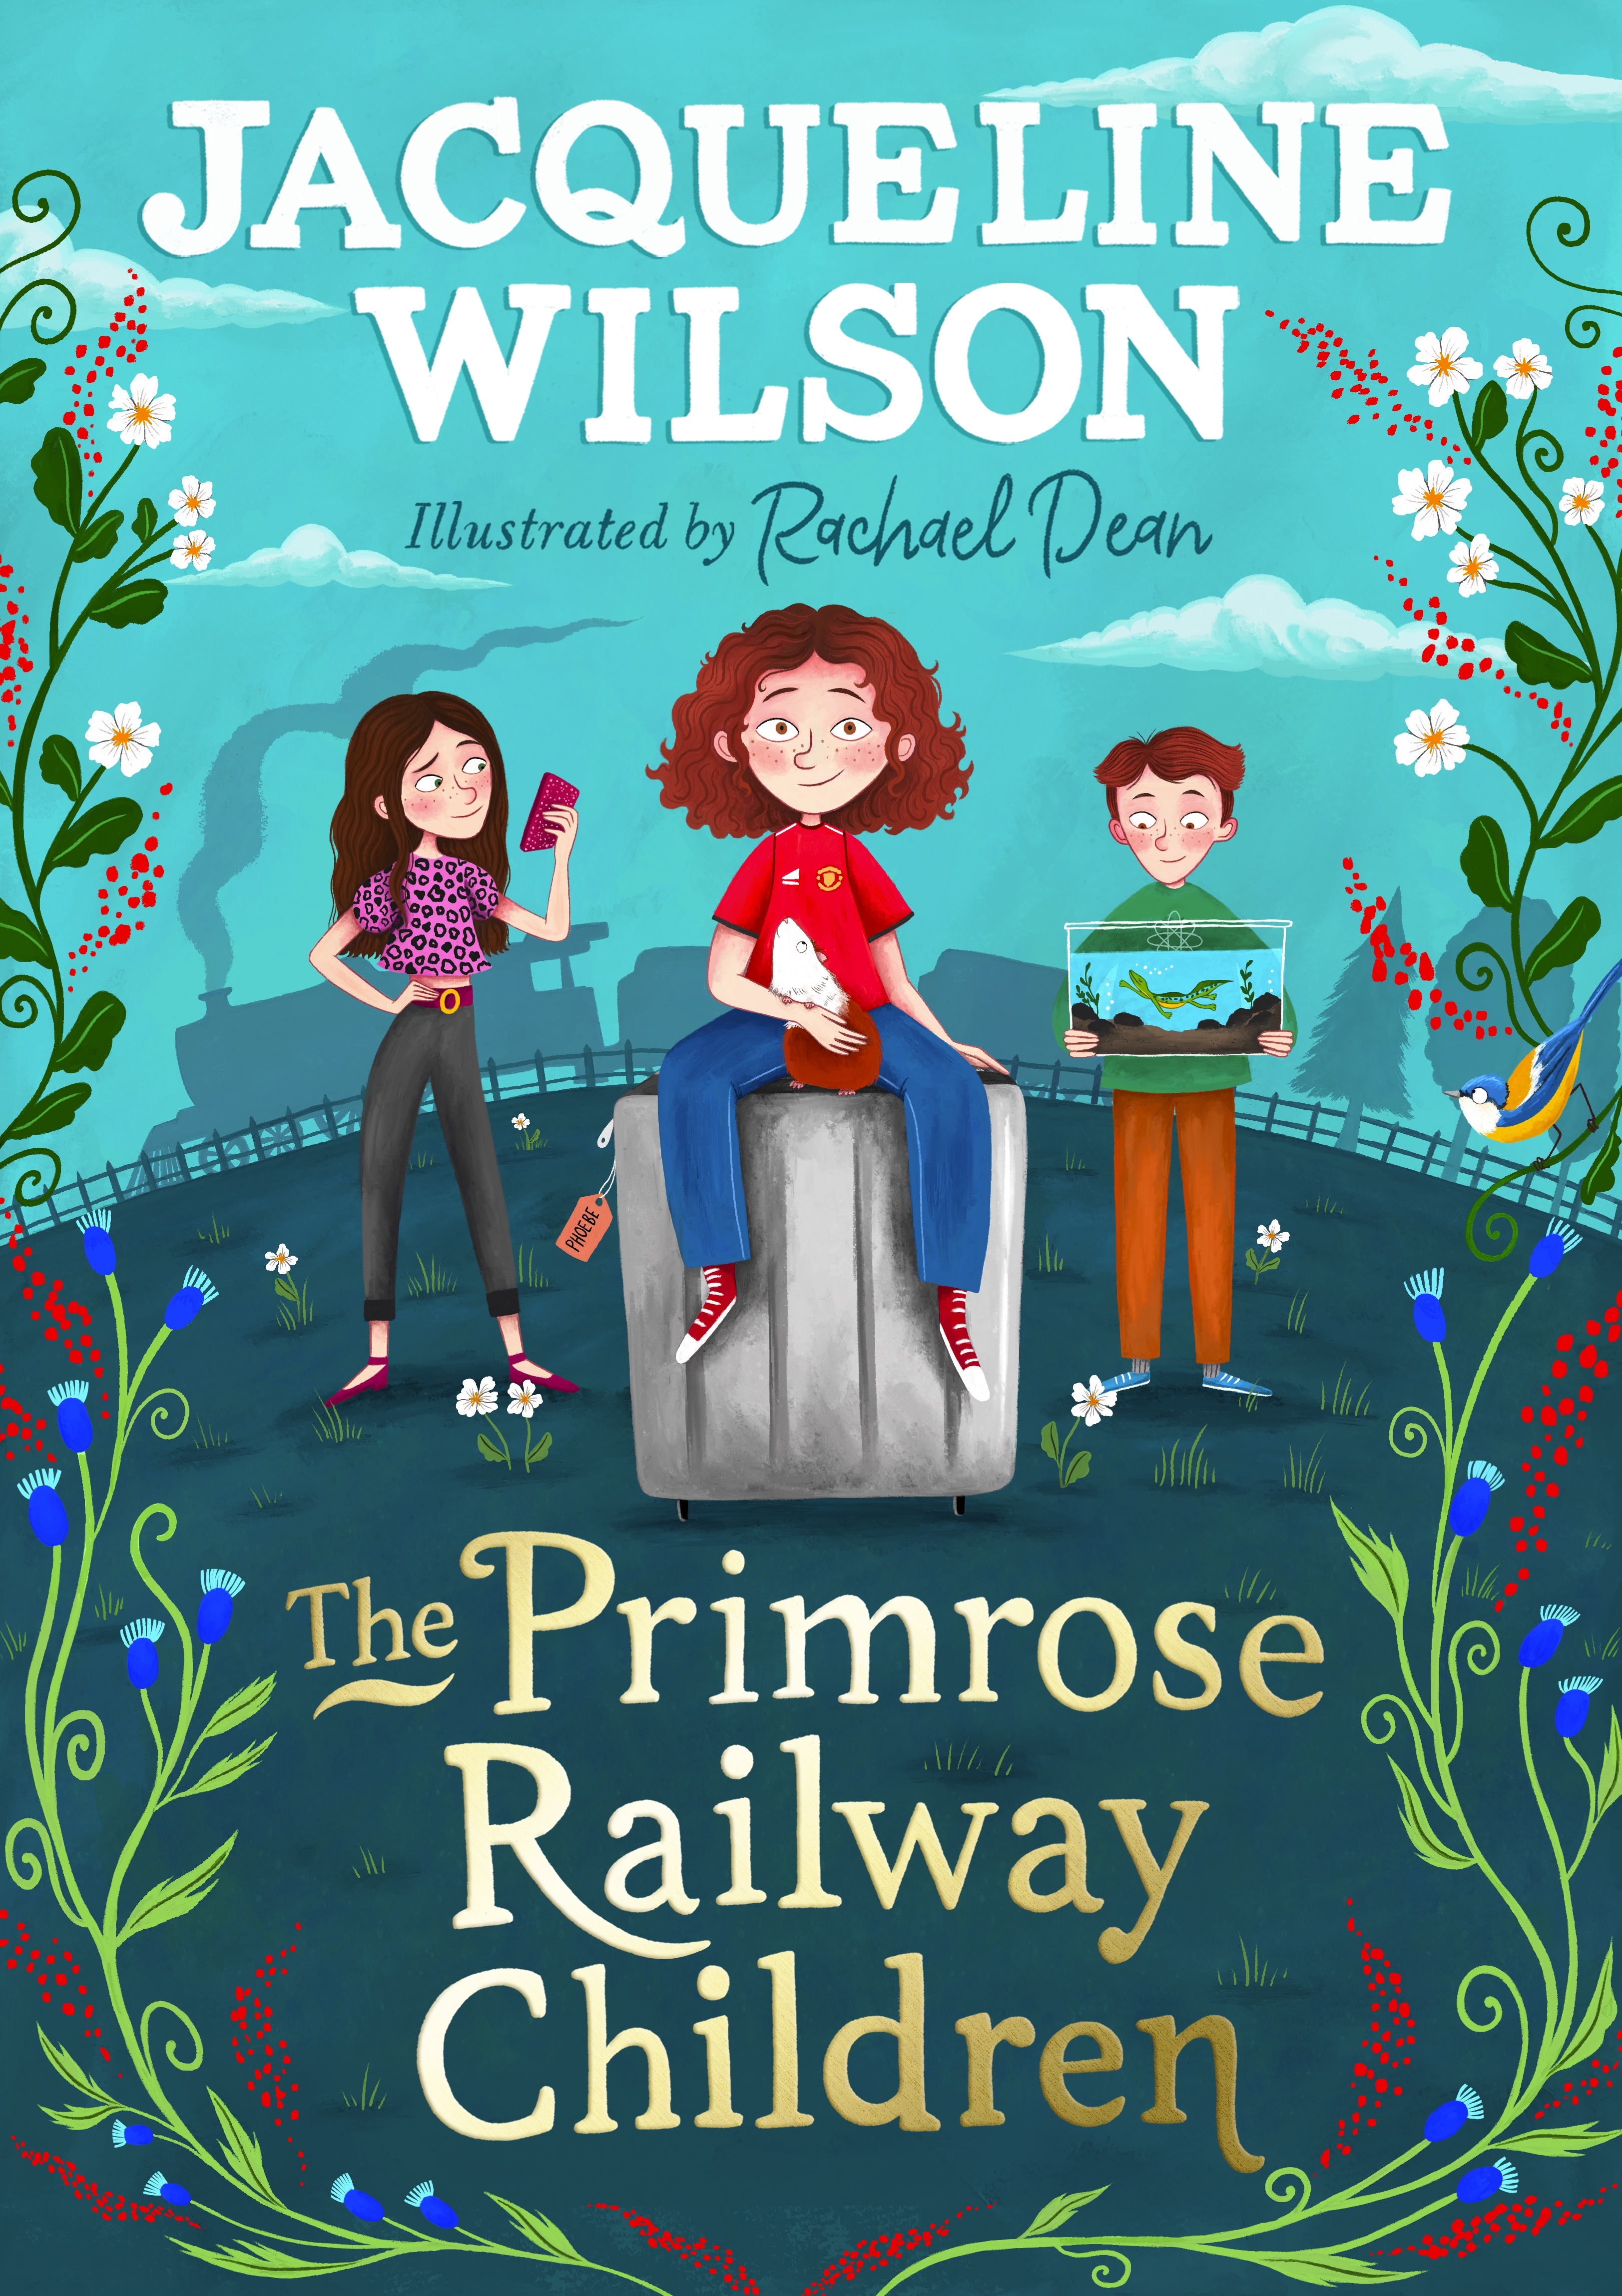 Book “The Primrose Railway Children” by Jacqueline Wilson — September 16, 2021